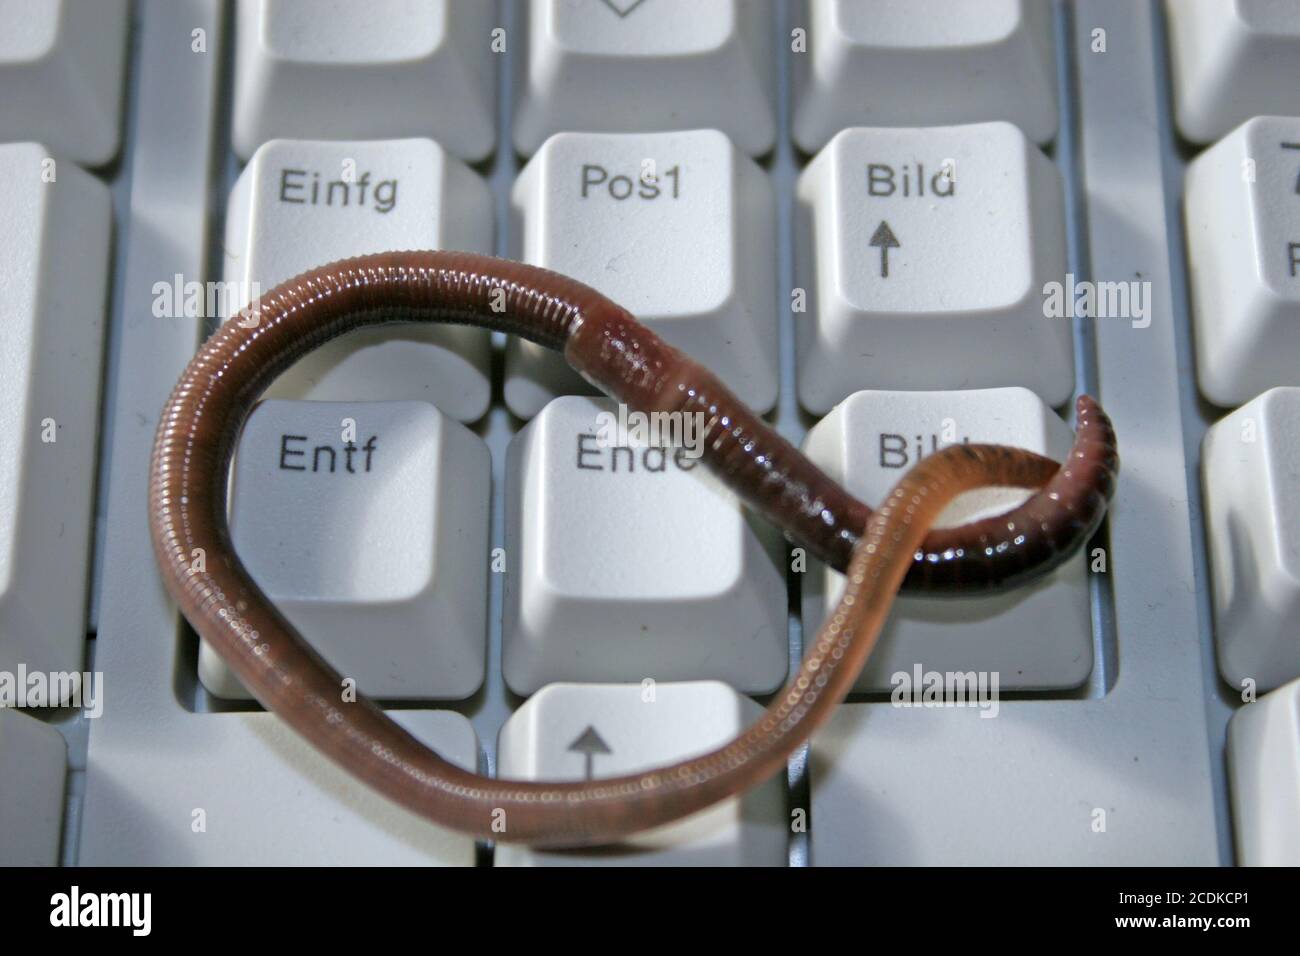 Computer worm Stock Photo